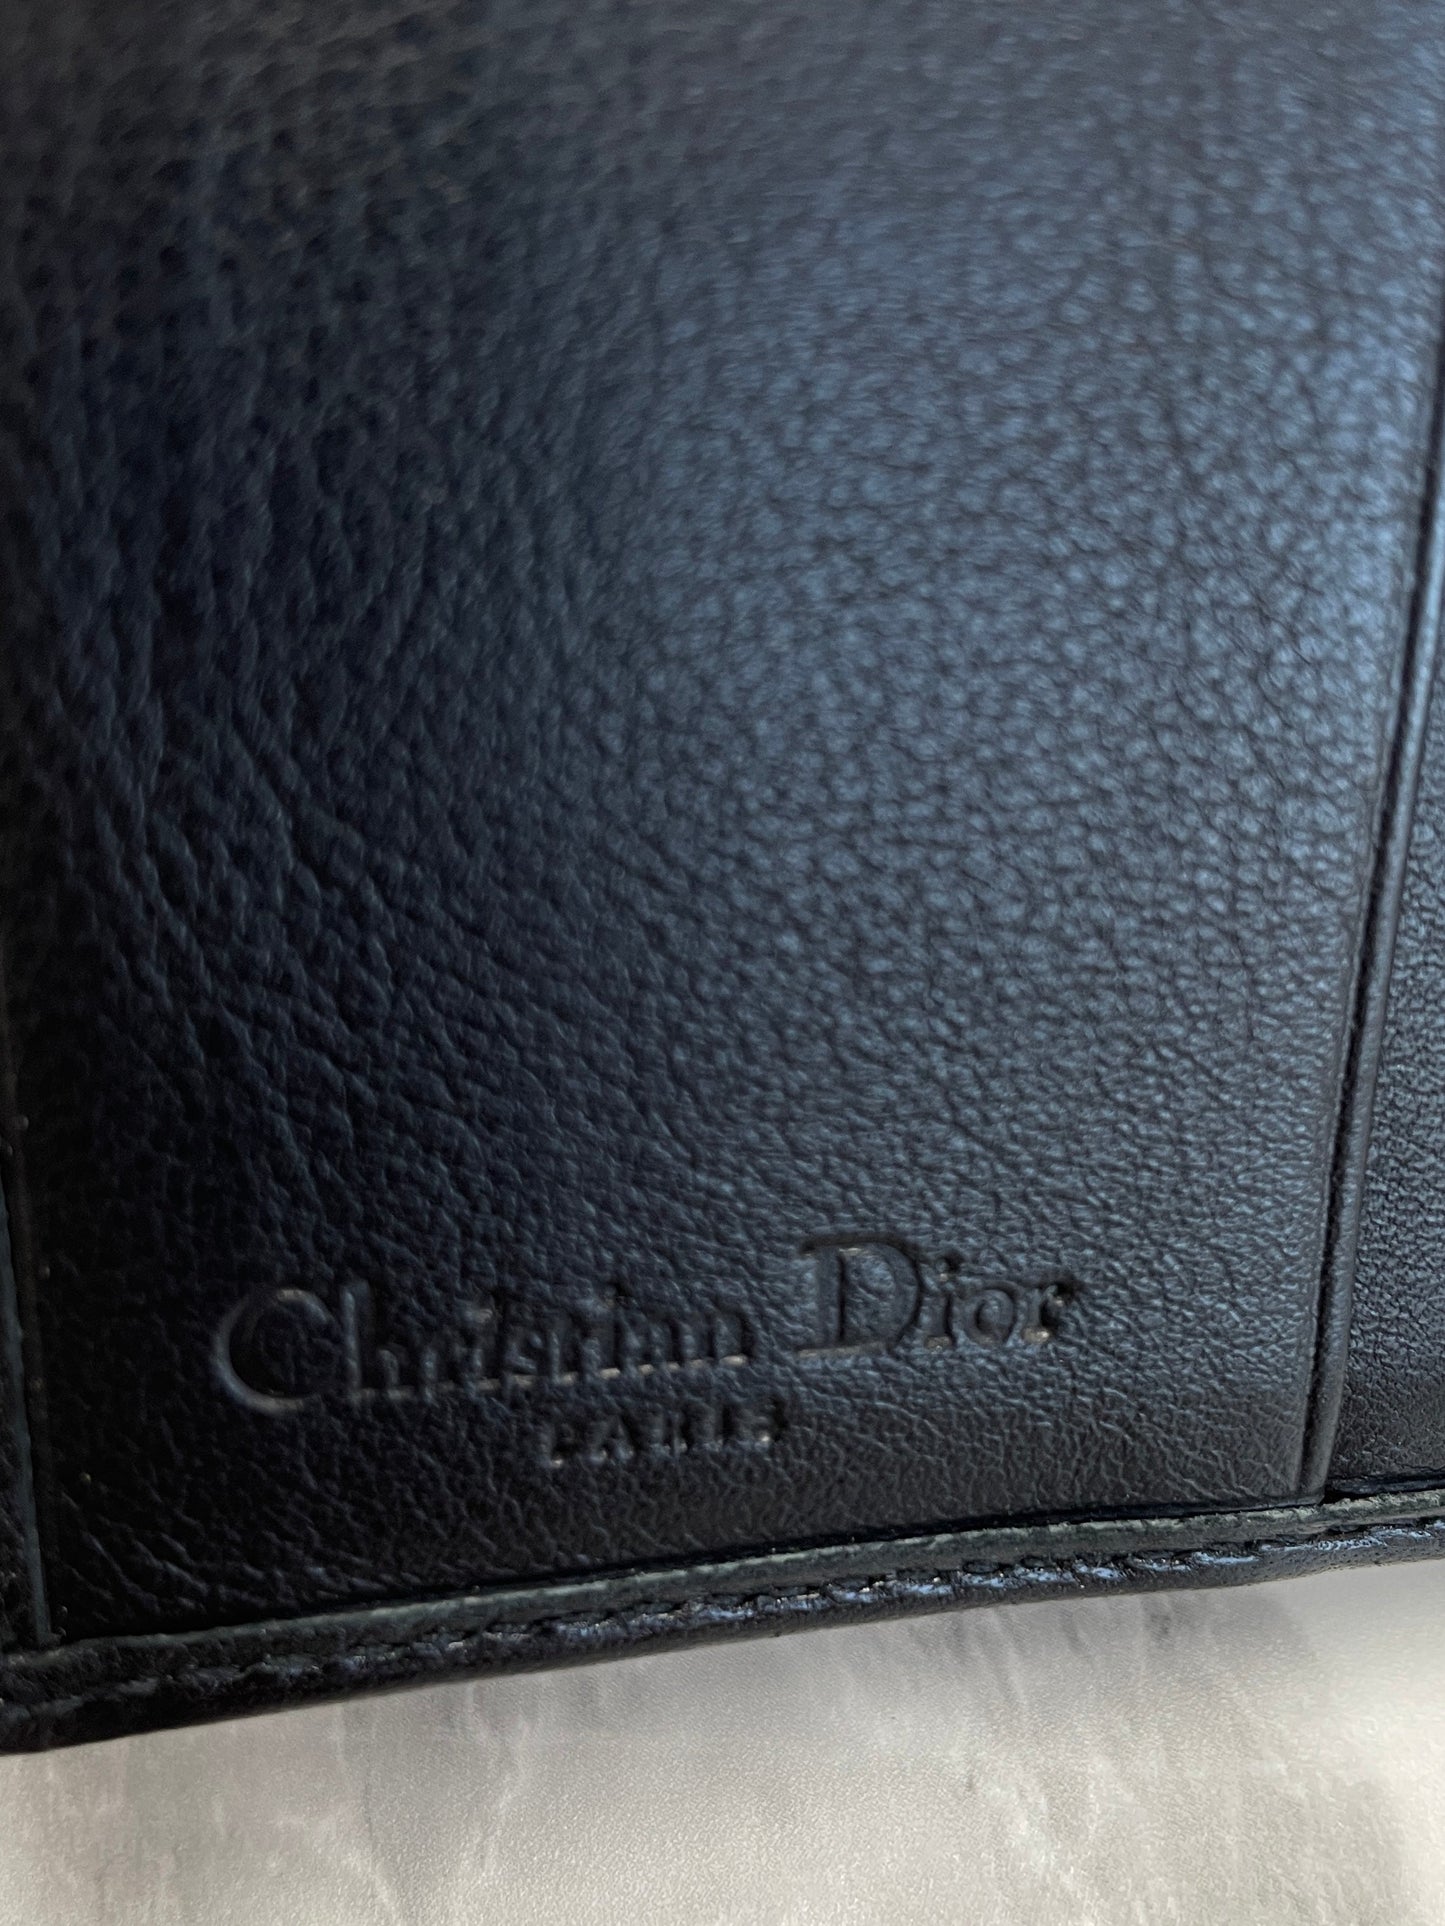 Christian Dior StudsCannage Wallet Black nae53z